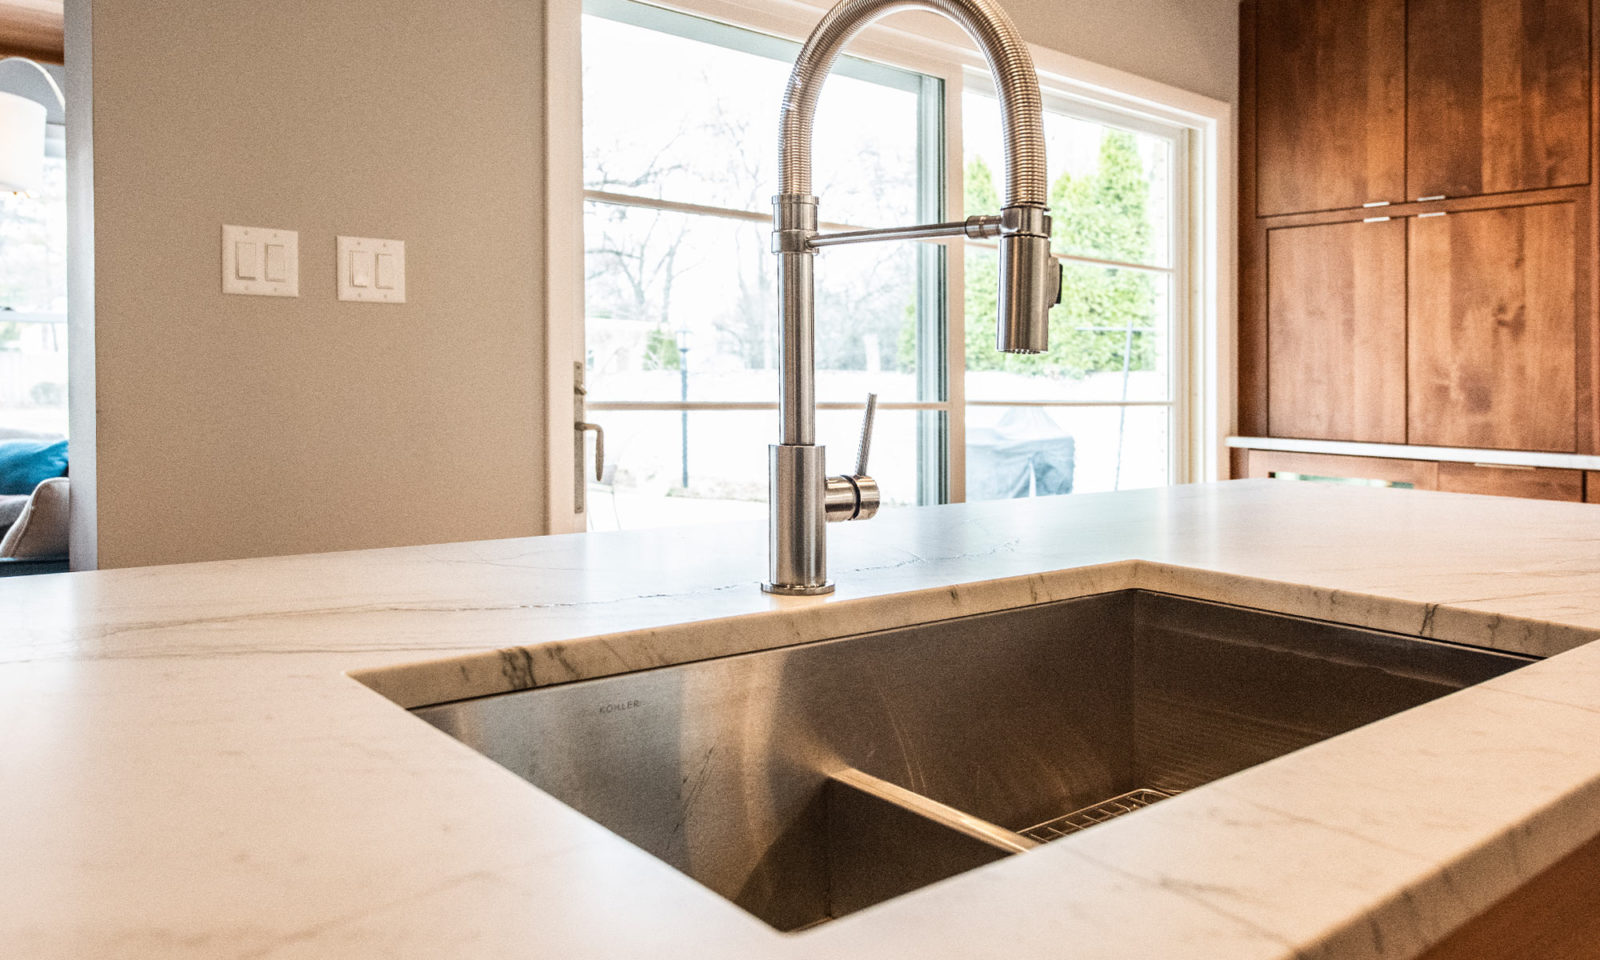 livco kitchen renovation nickel faucet finish deep double sink quartz countertops